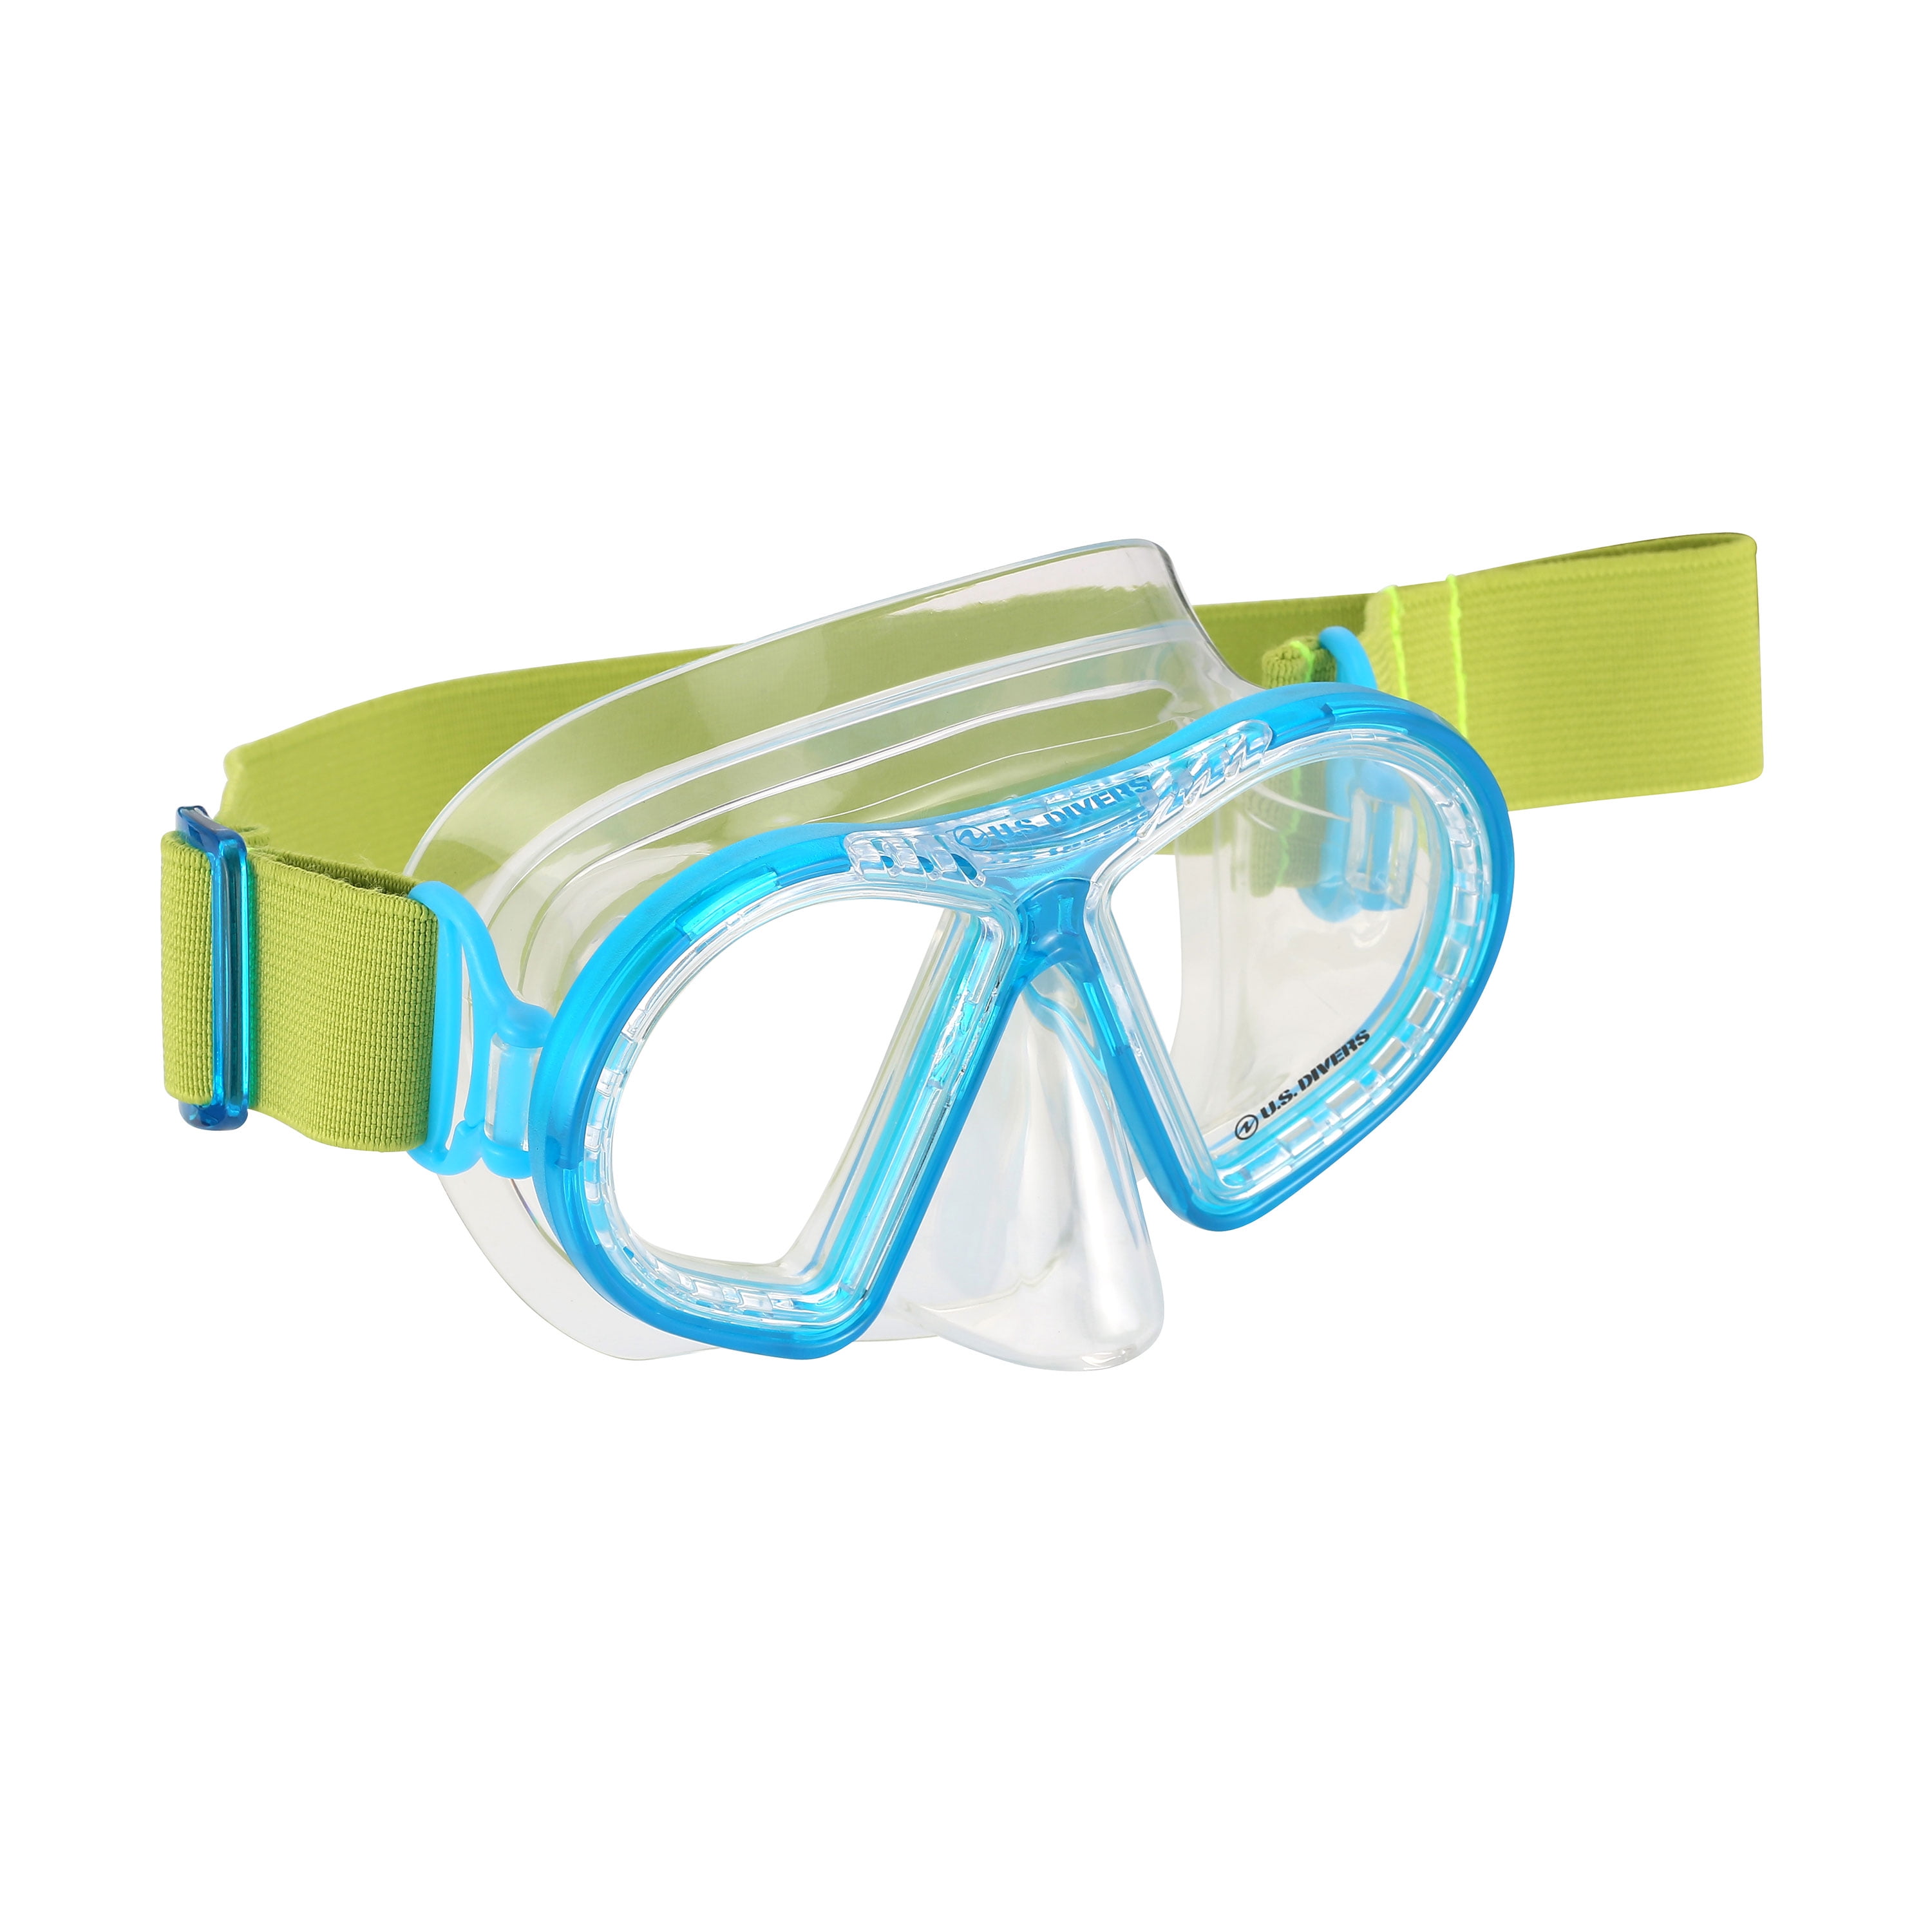 Divers Ages 6+ Fabric U.S. Kids Snorkeling Jr Mask Toucan Easy (Blue) Strap Adjust